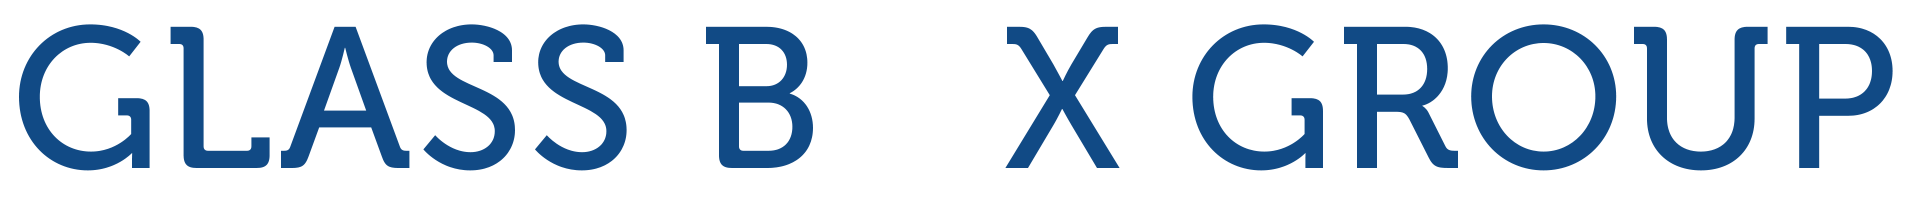 GlassBoxGroup-full-logo-mix2